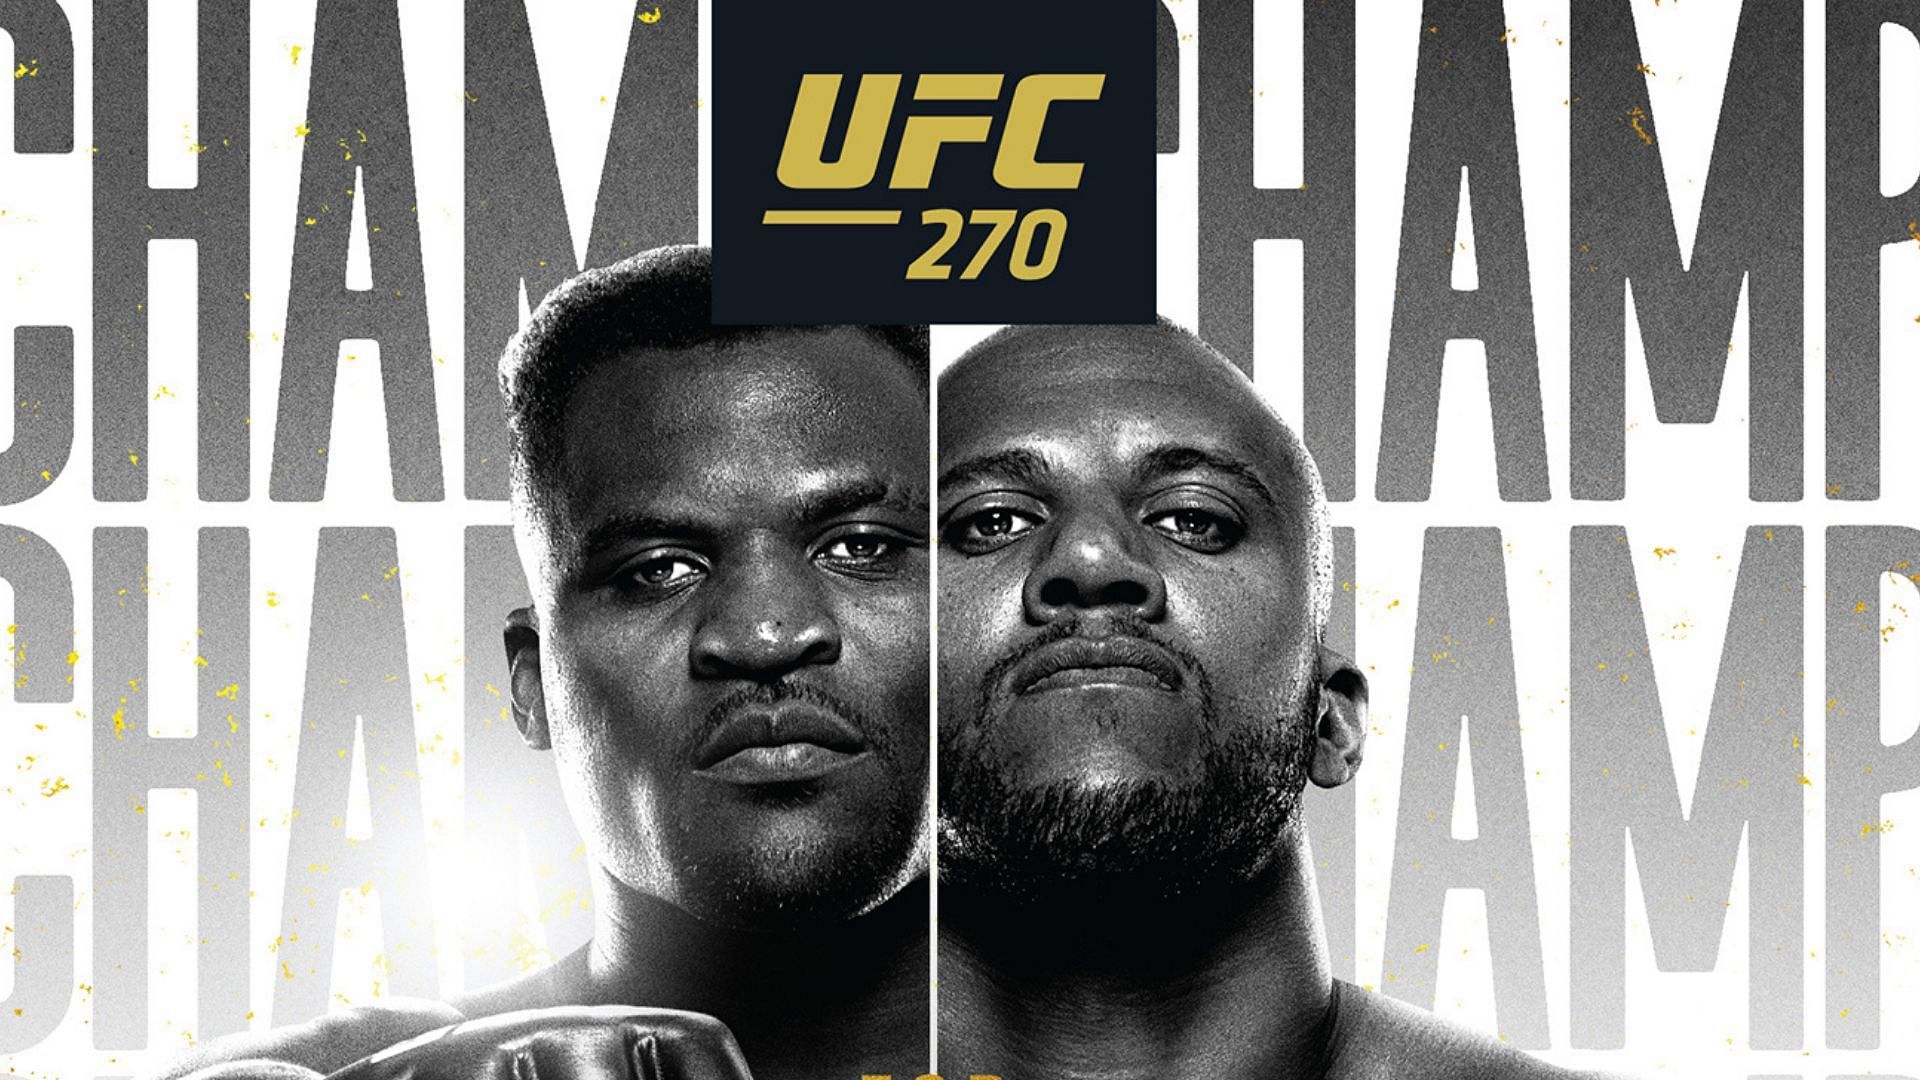 UFC 270 poster [Image Courtesy: @ufc on Instagram]